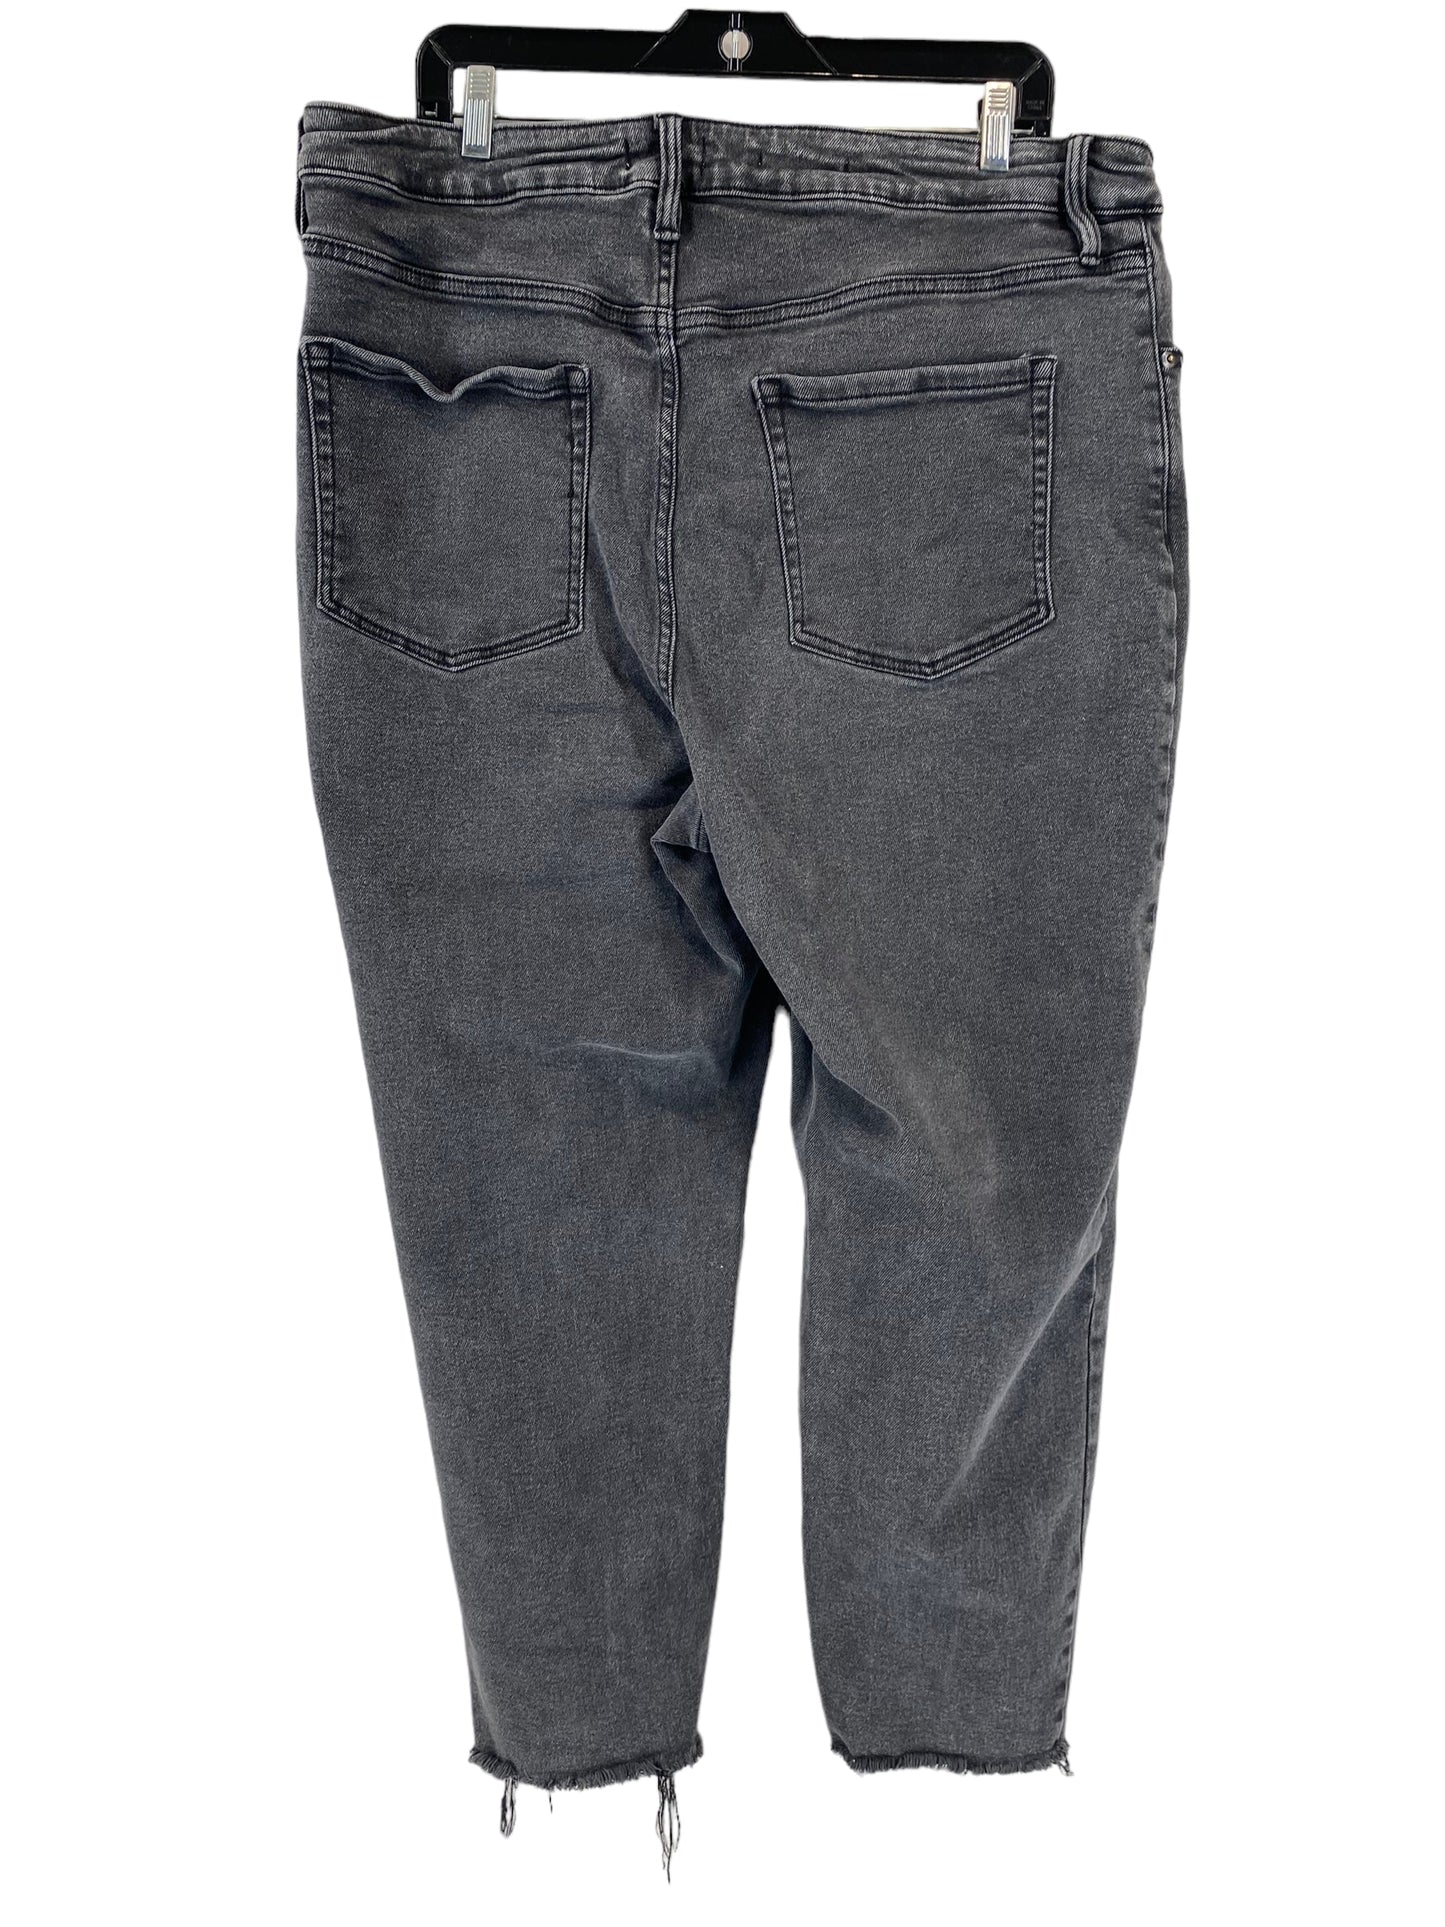 Jeans Straight By Ava & Viv  Size: 20